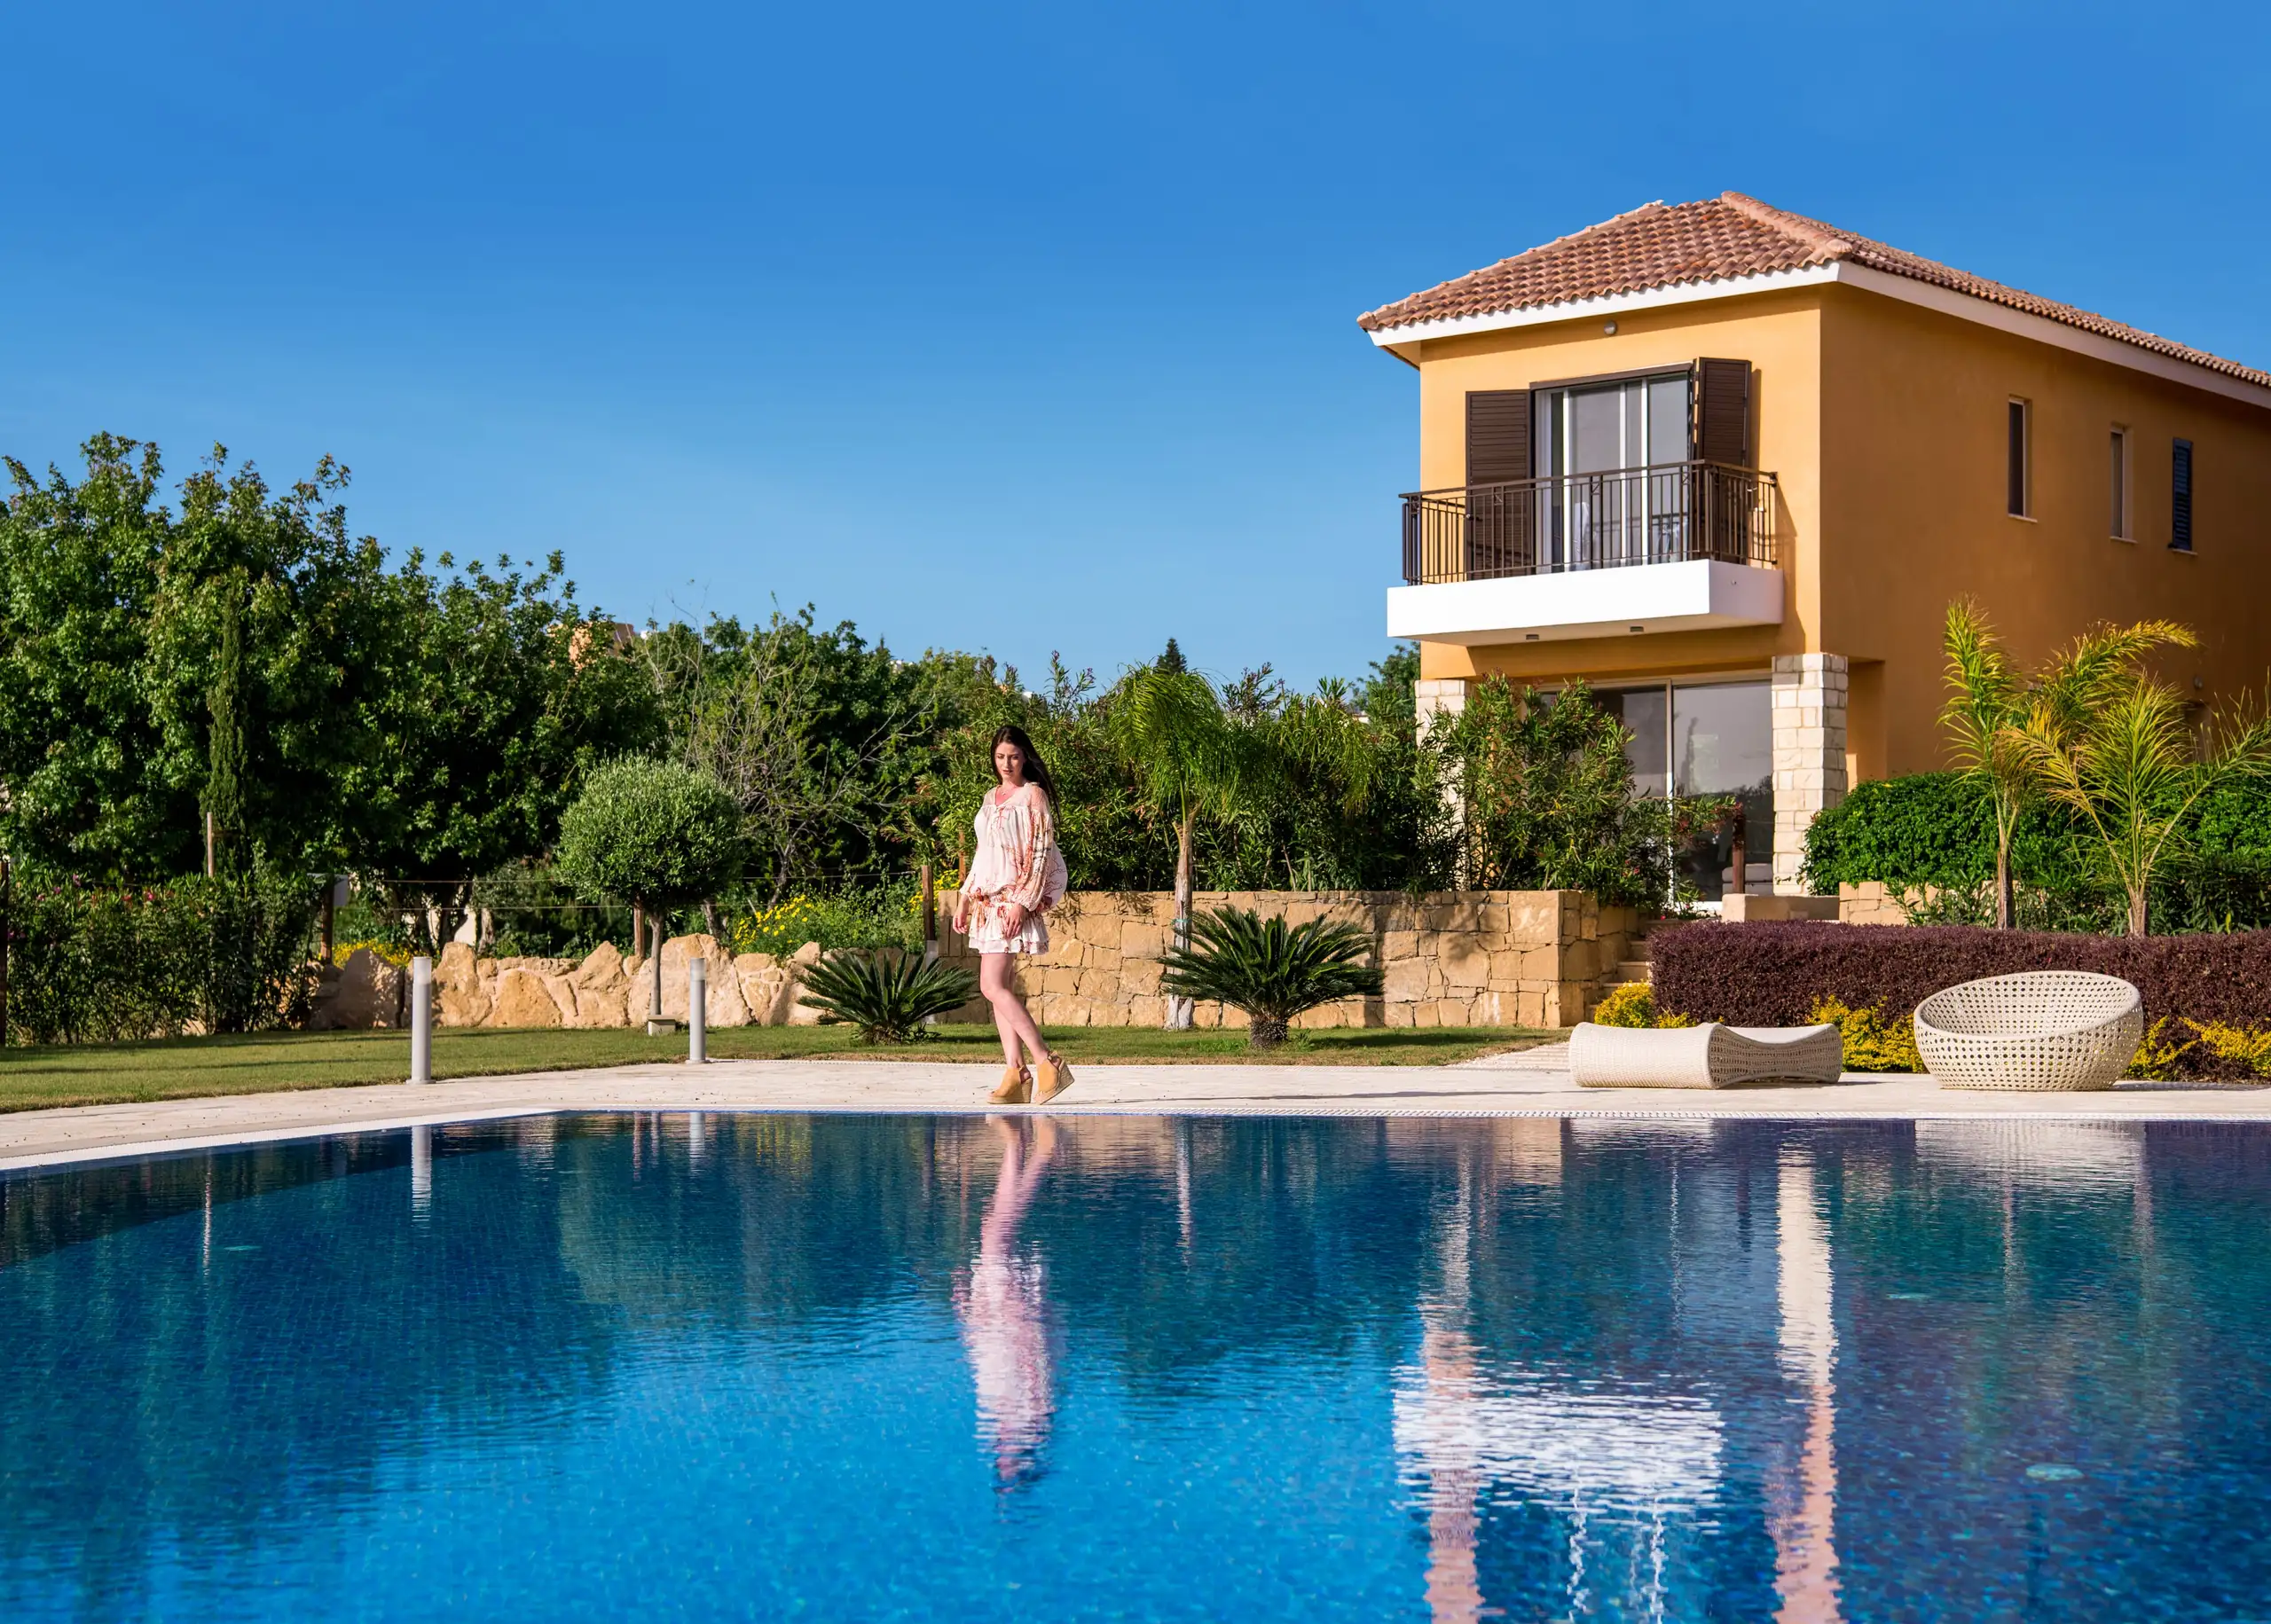 Acropolis Homes - Venus Gardens - Real Estate Agency - Property Photo - Swimming Pool